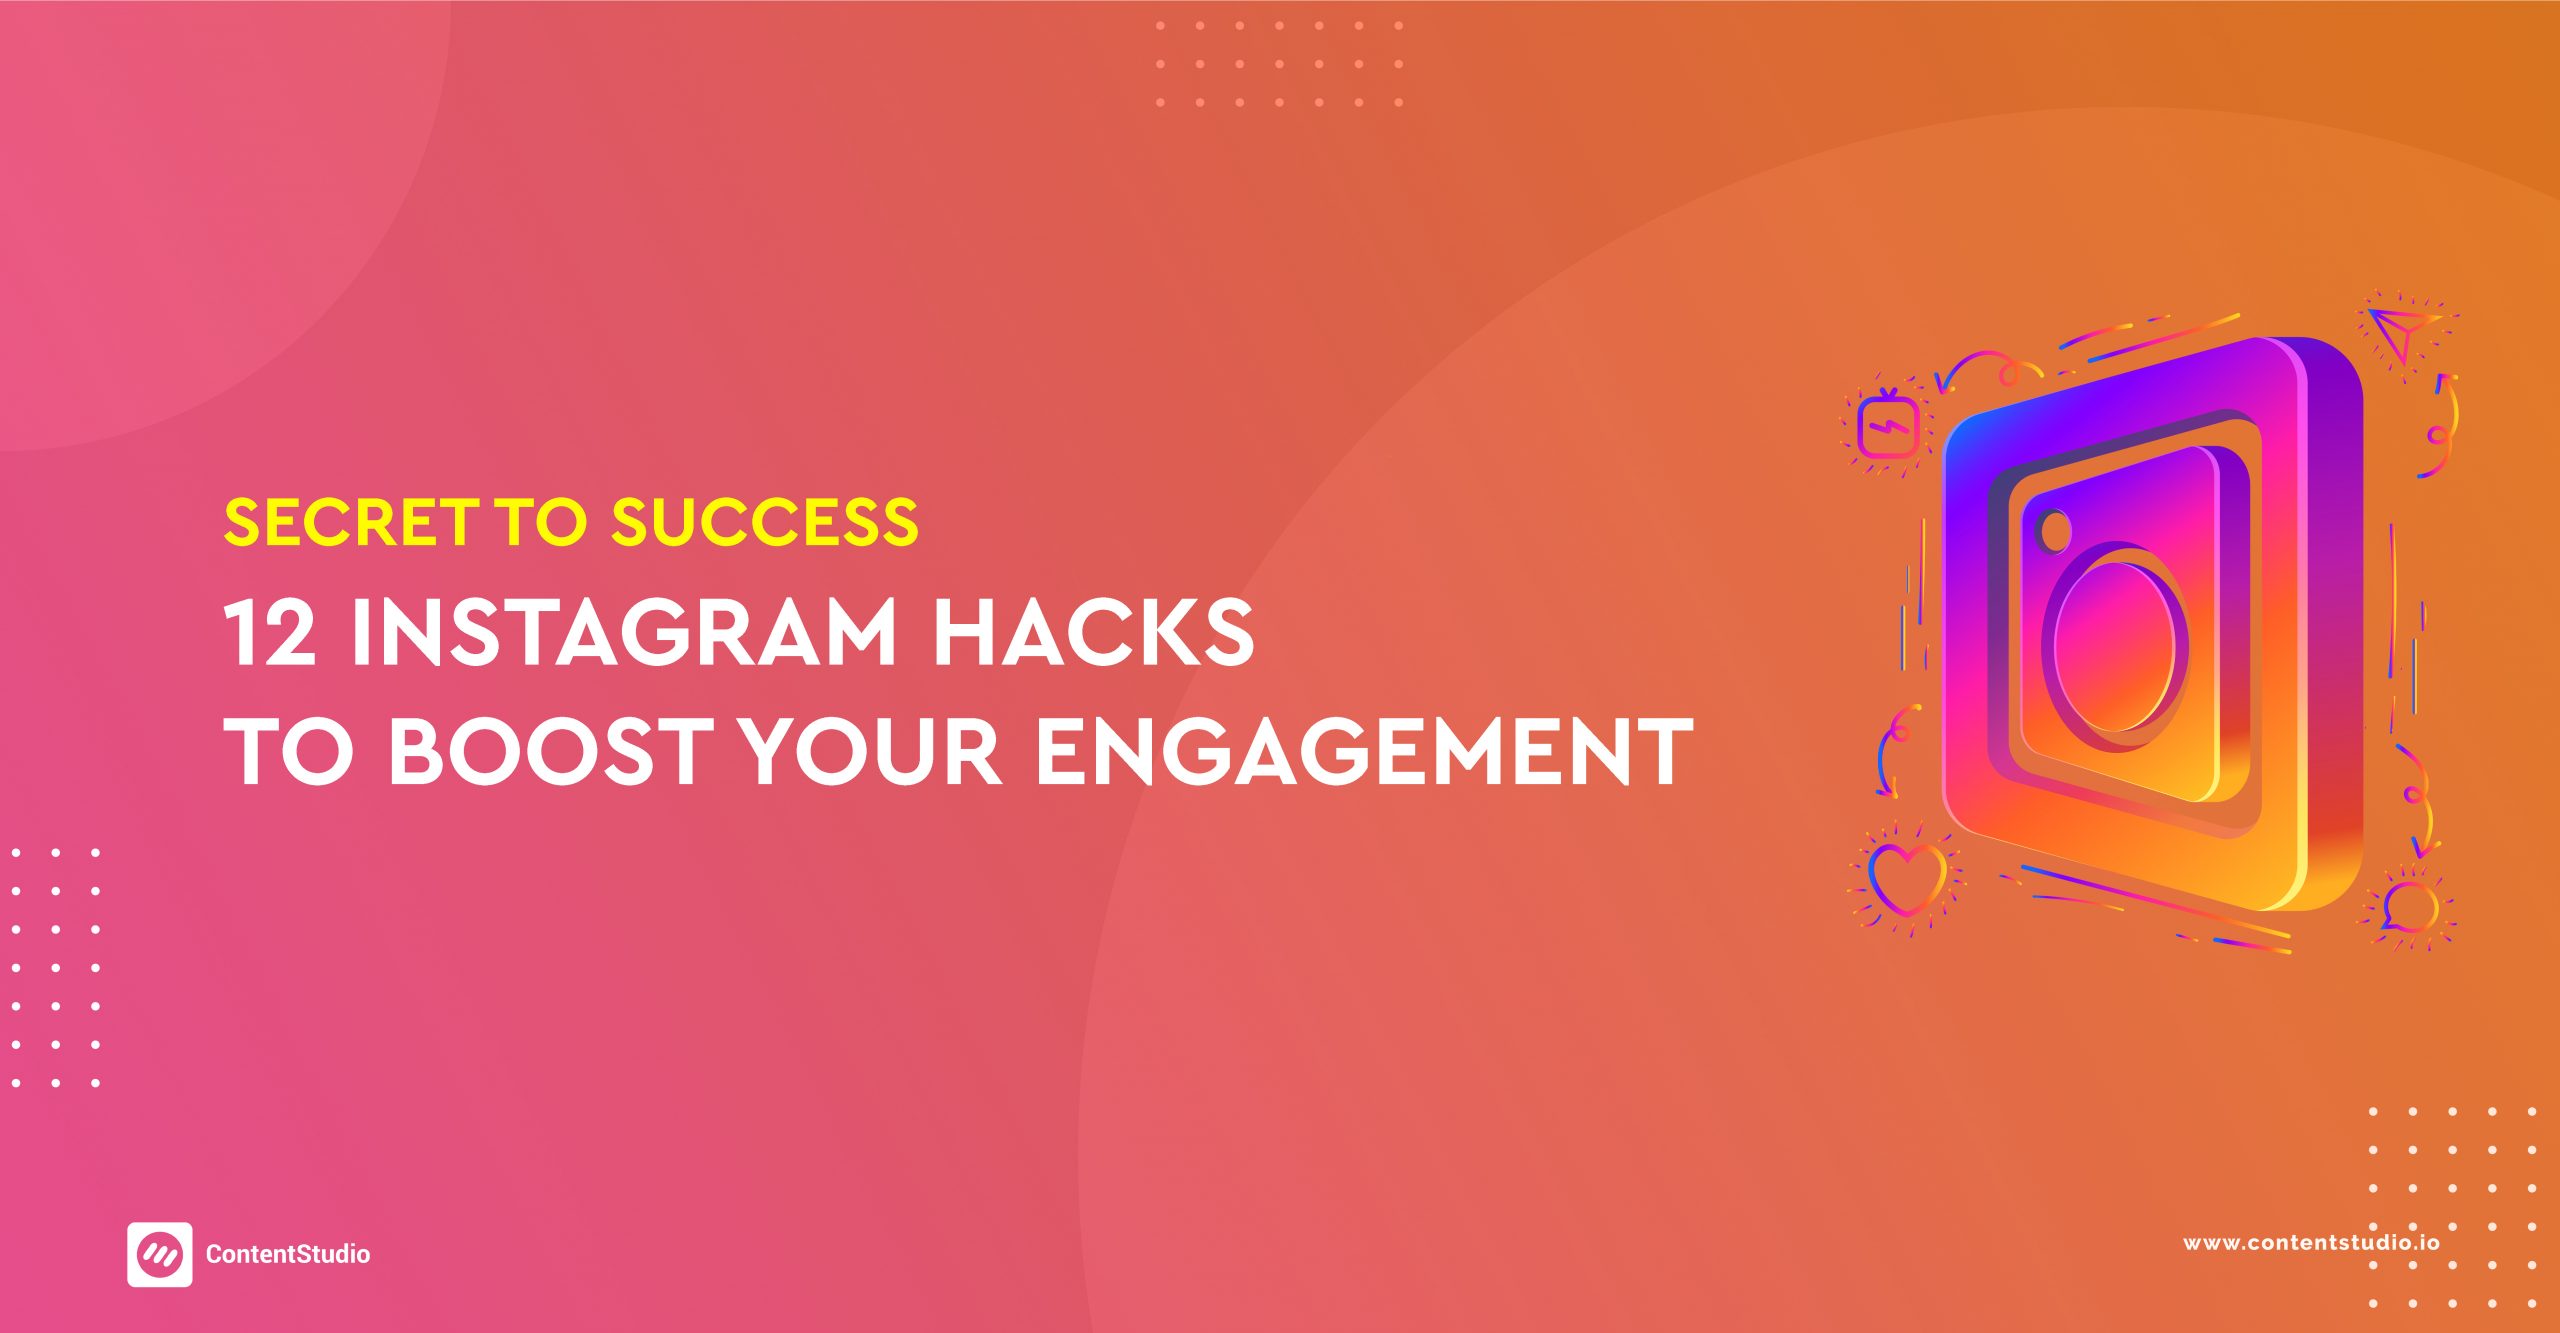 Secret to Success: 12 Instagram Hacks to Boost Engagement